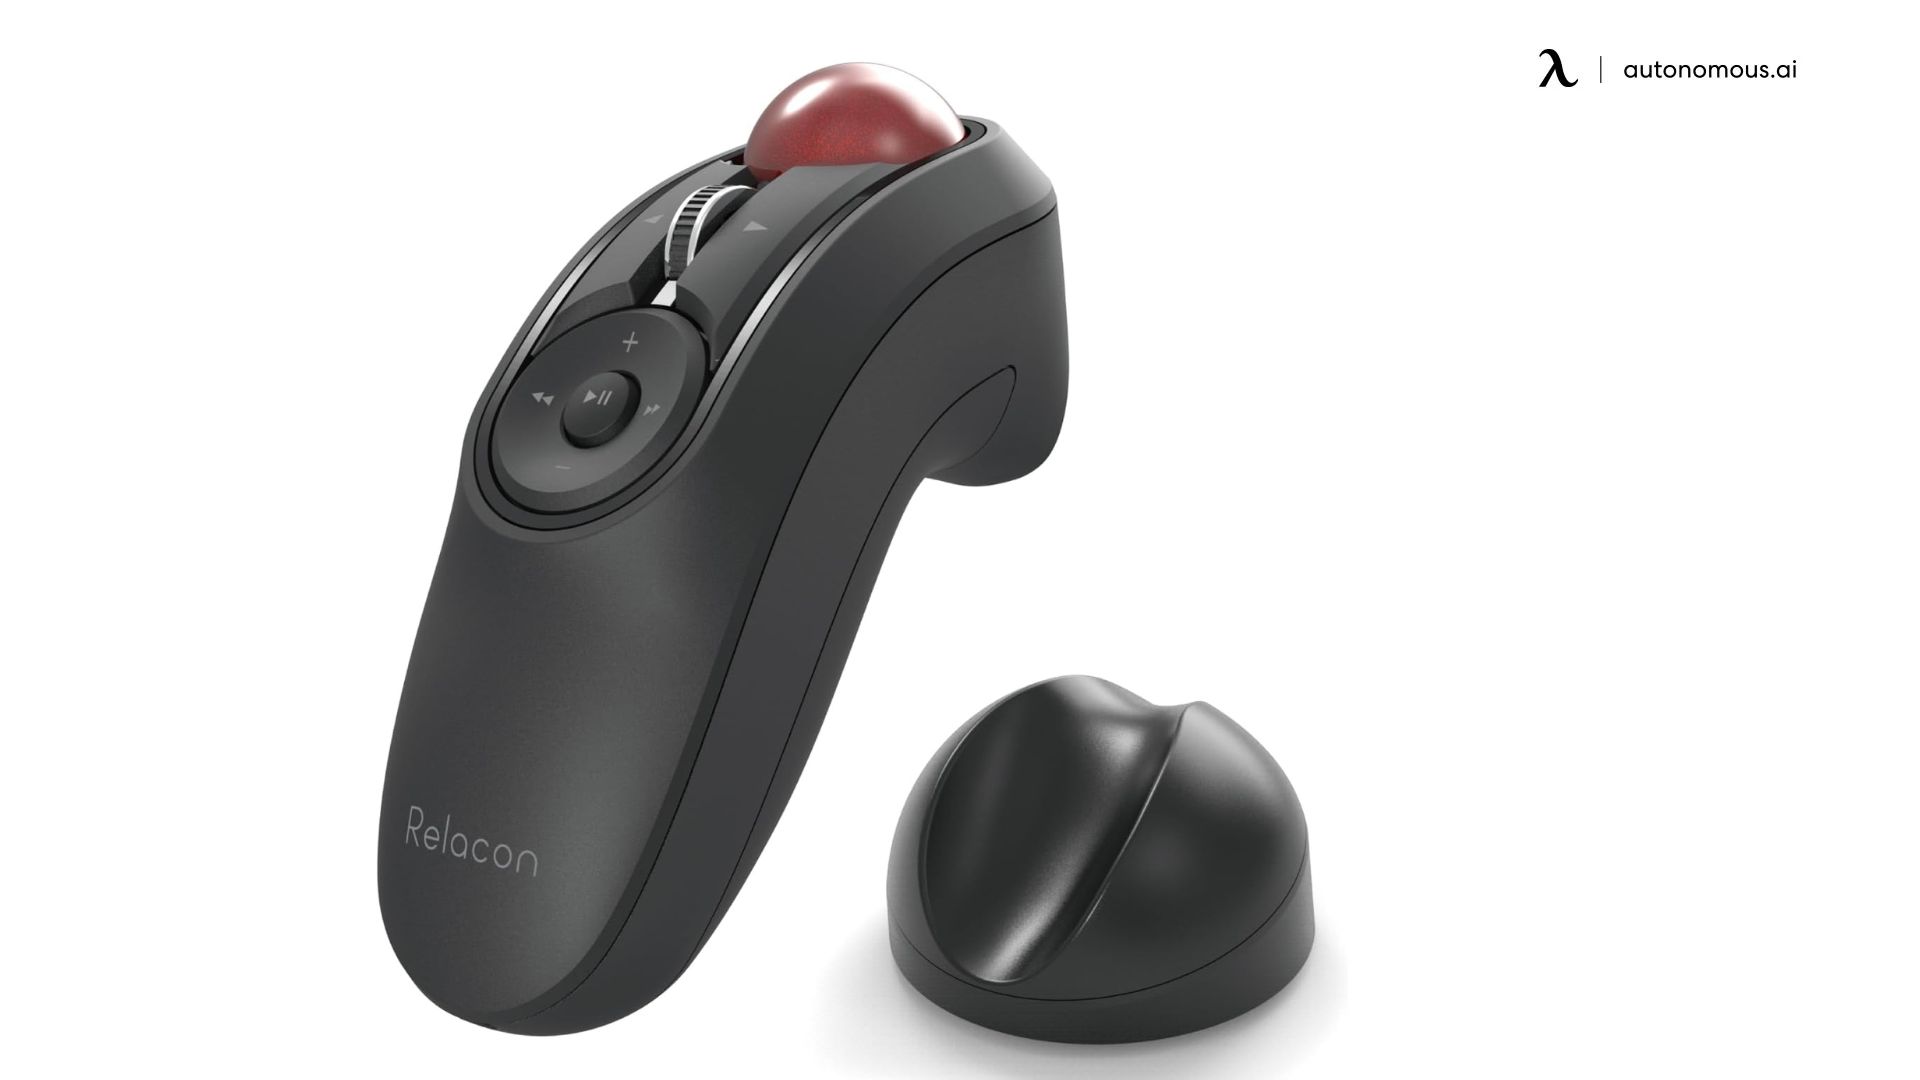 ELECOM Bluetooth Thumb Trackball Mouse